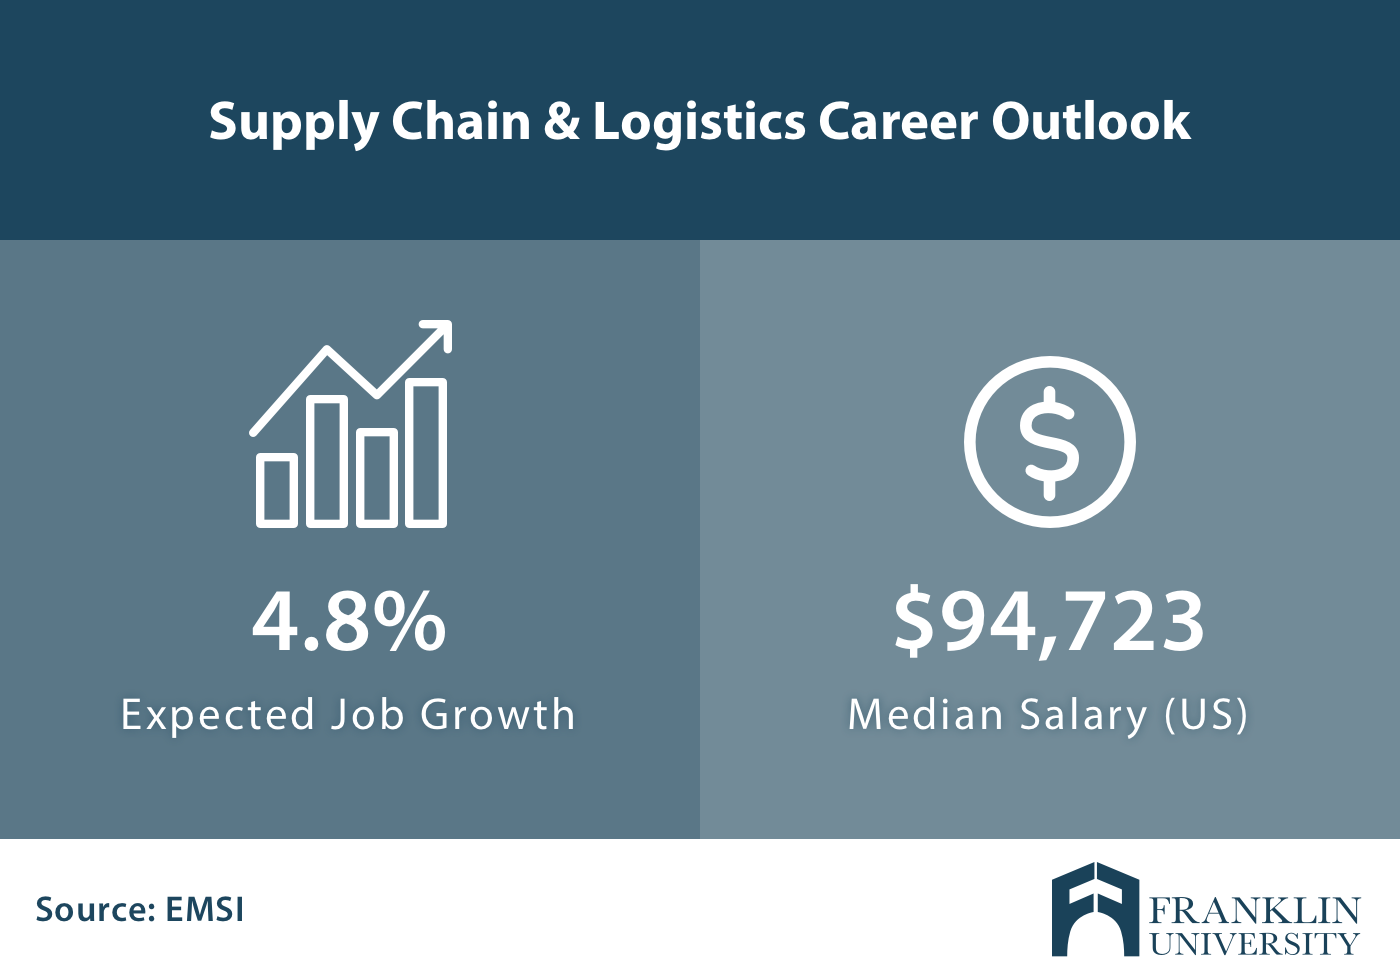 Line Management & Marketing Logistics / Supply Chain Jobs Singapore